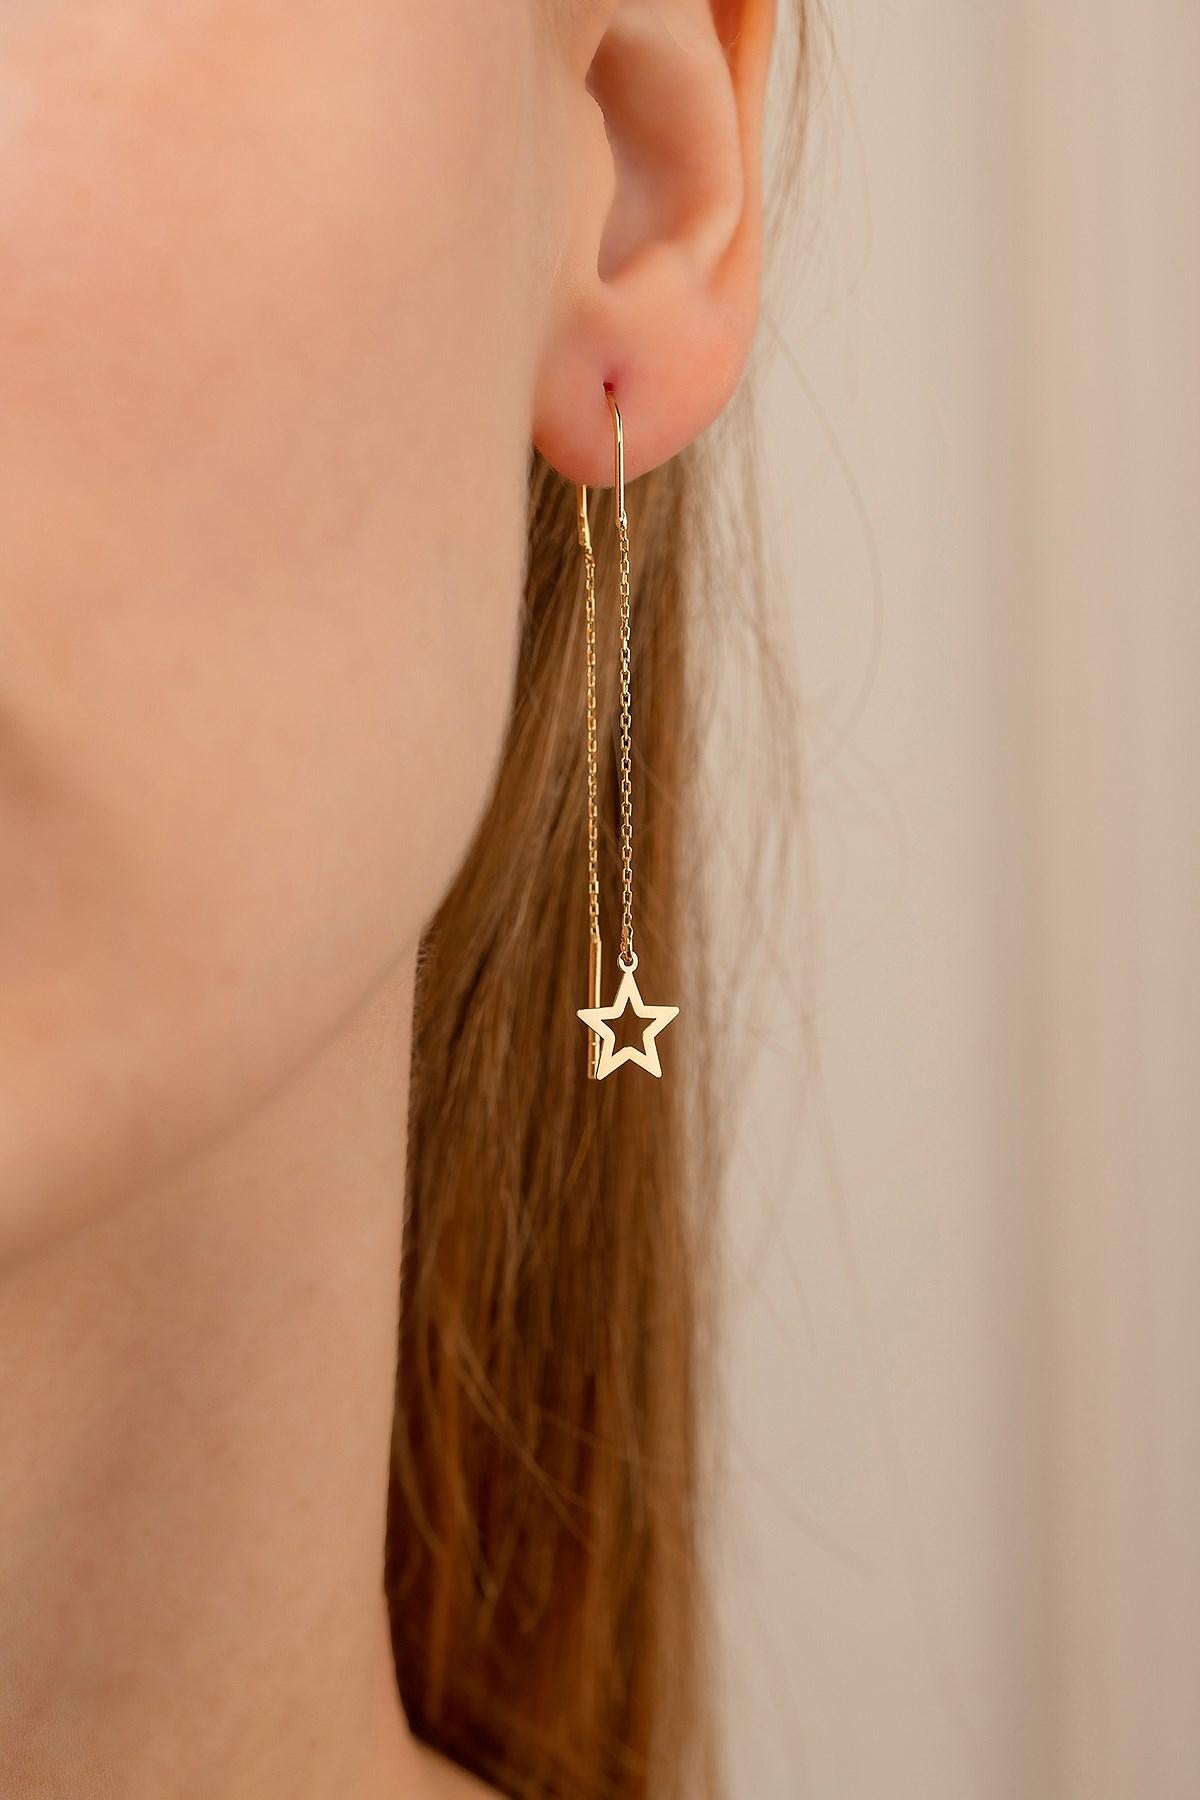 Starburst Threader Earrings in 14k gold. 
14 k yellow gold Threader star earrings. North Star U Shape Ear Threaders.

Metal: 14k gold
Weight: 1.1 g.
Earrings Size: 44 mm lengt and star diameter 9 mm.

auction